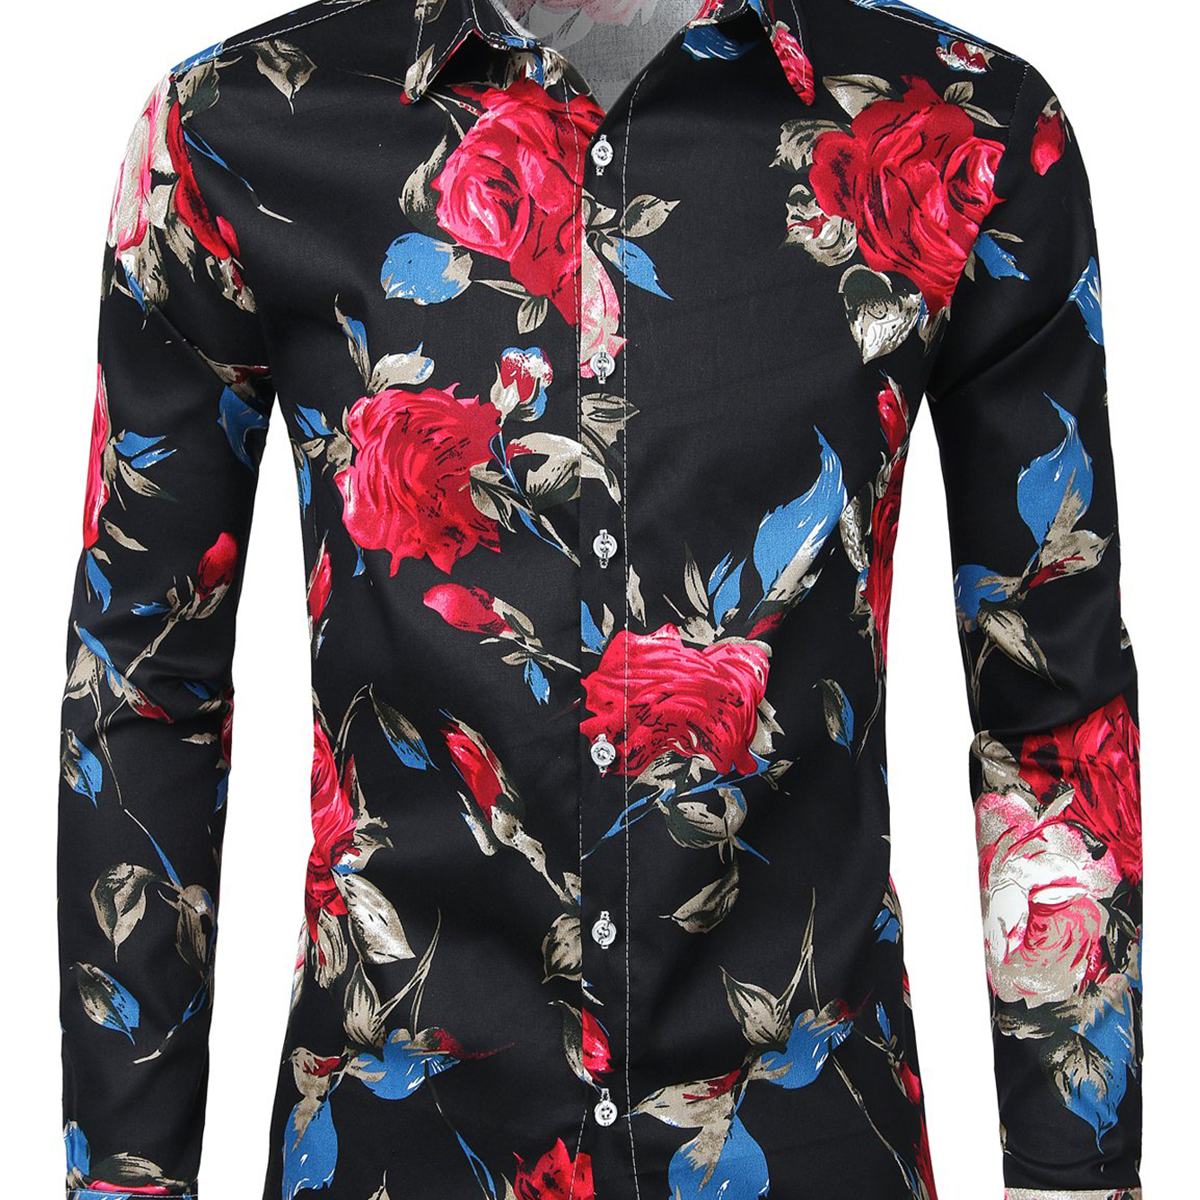 Men's Floral Cotton Rose Flower Print Black Long Sleeve Regular fit Dress Shirt